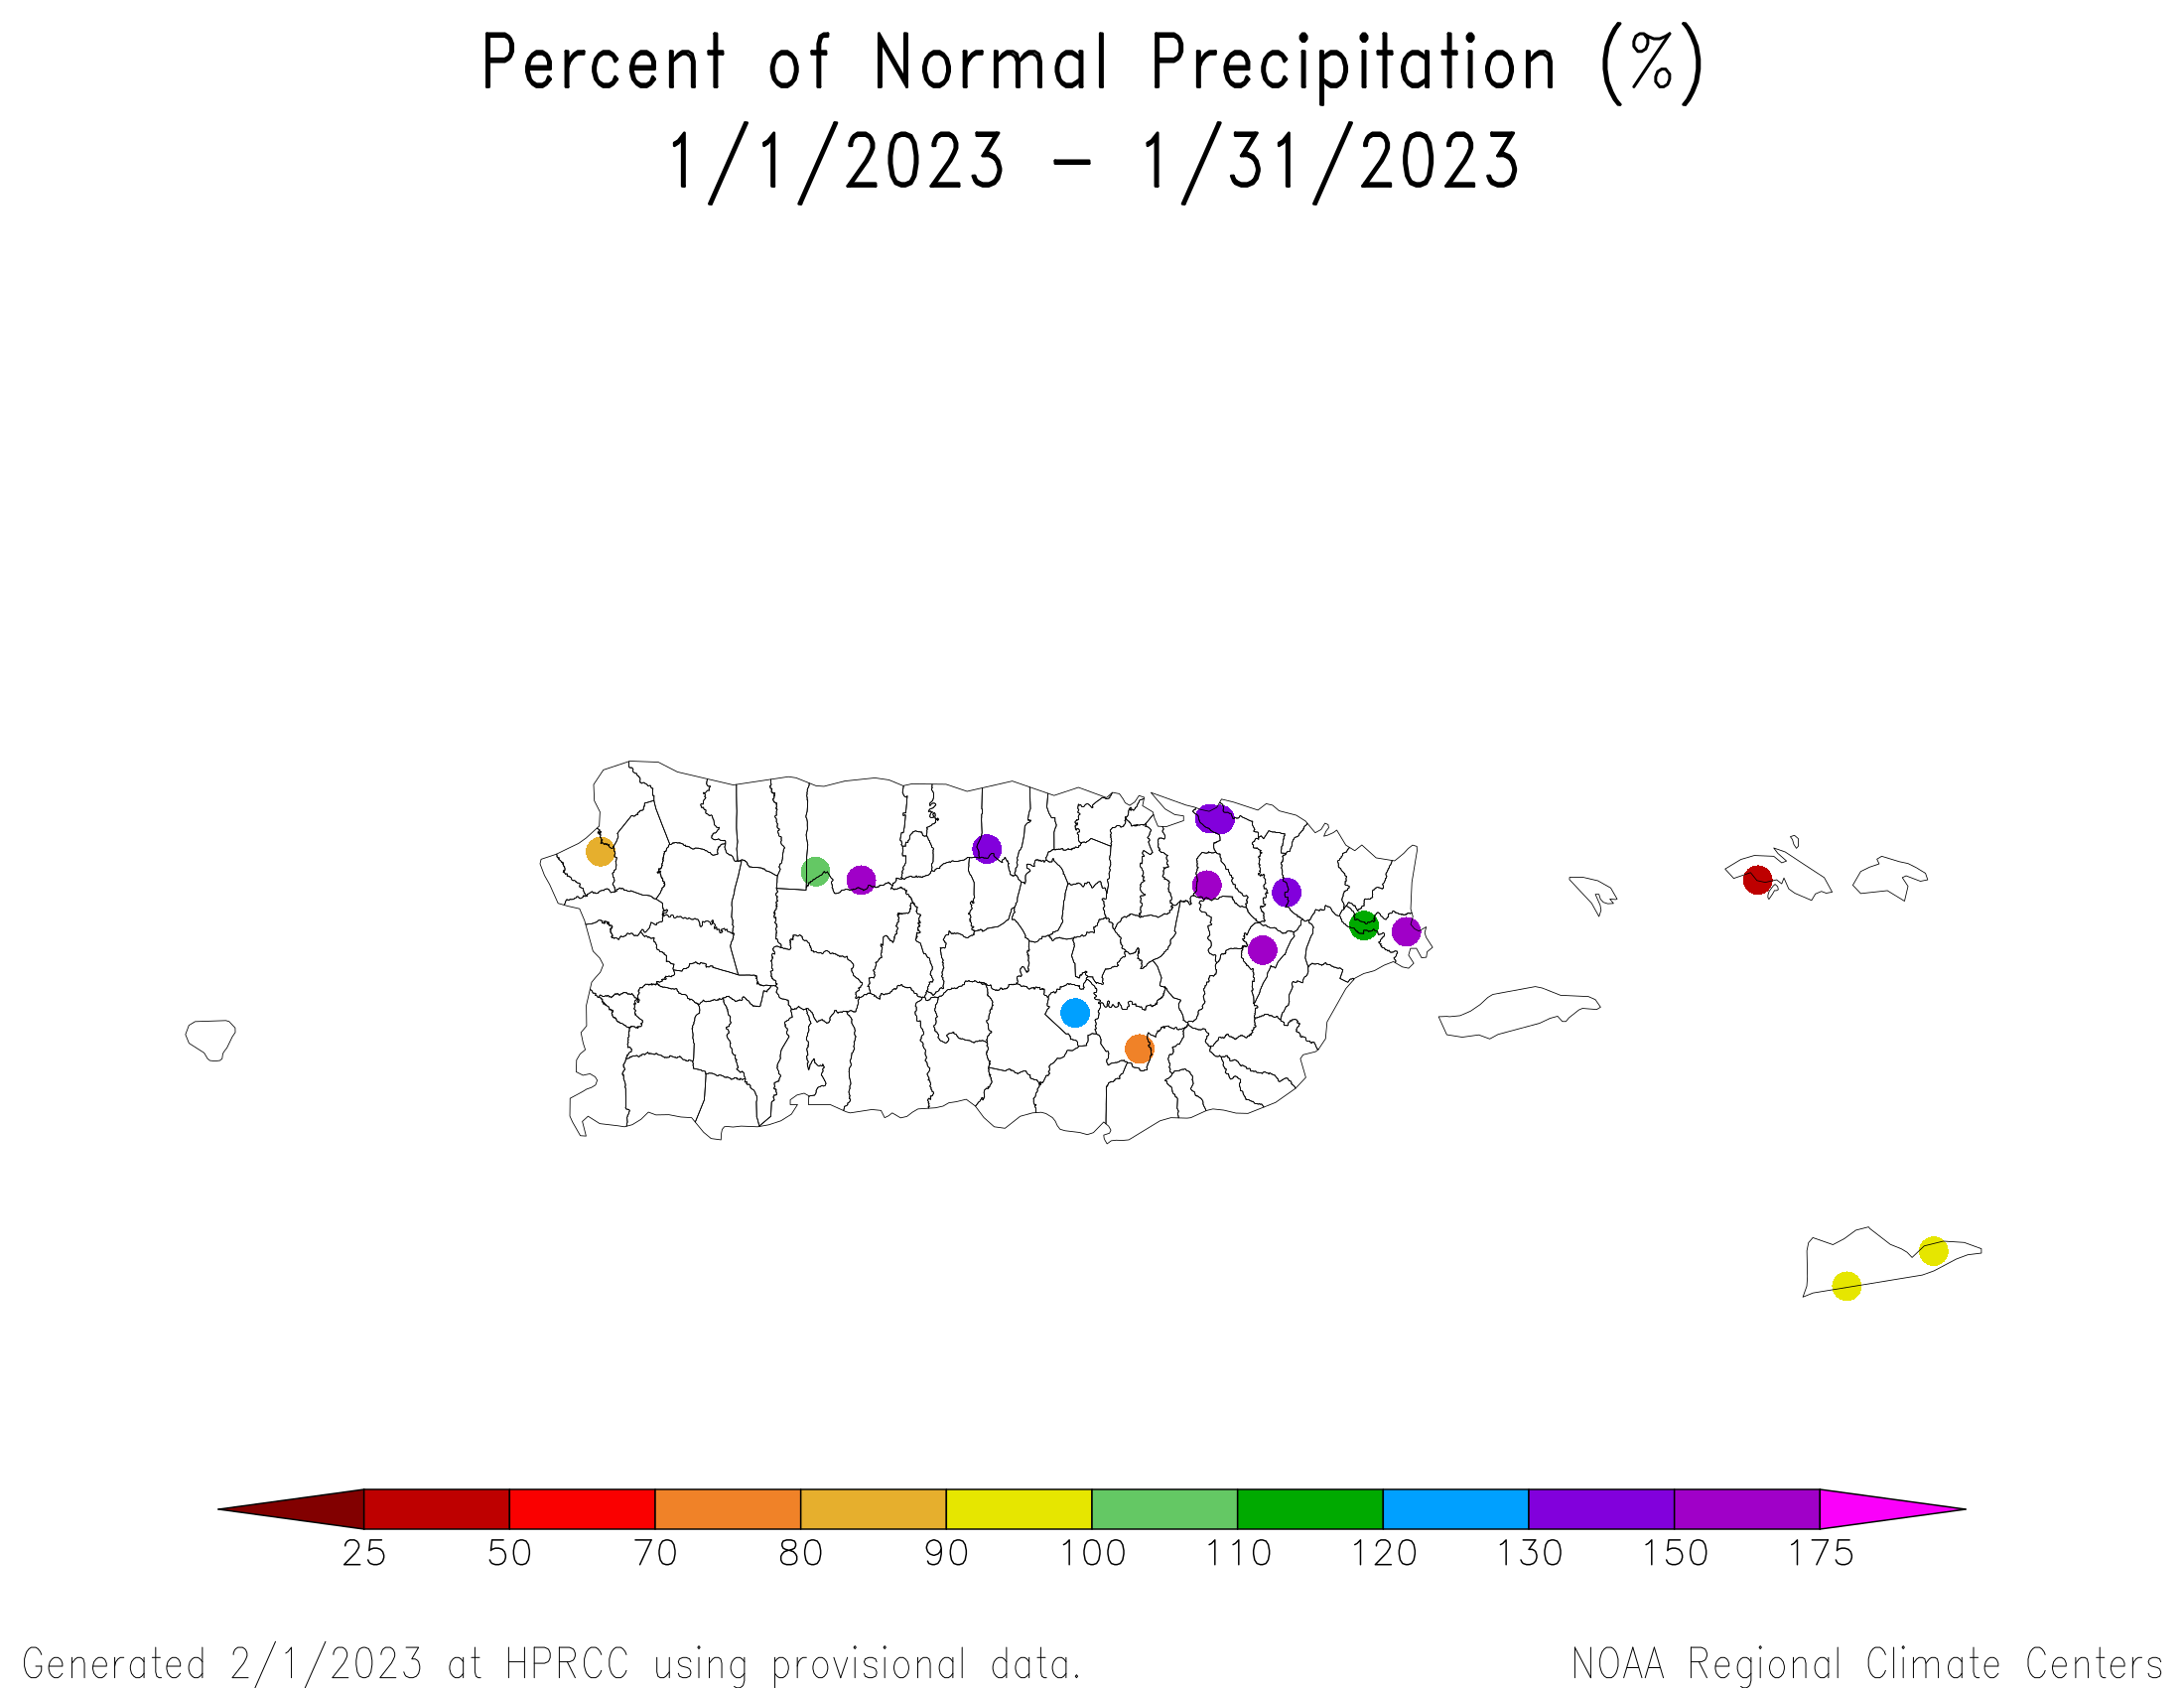 Puerto Rico and US Virgin Islands Percent of Normal Precipitation, January 2023